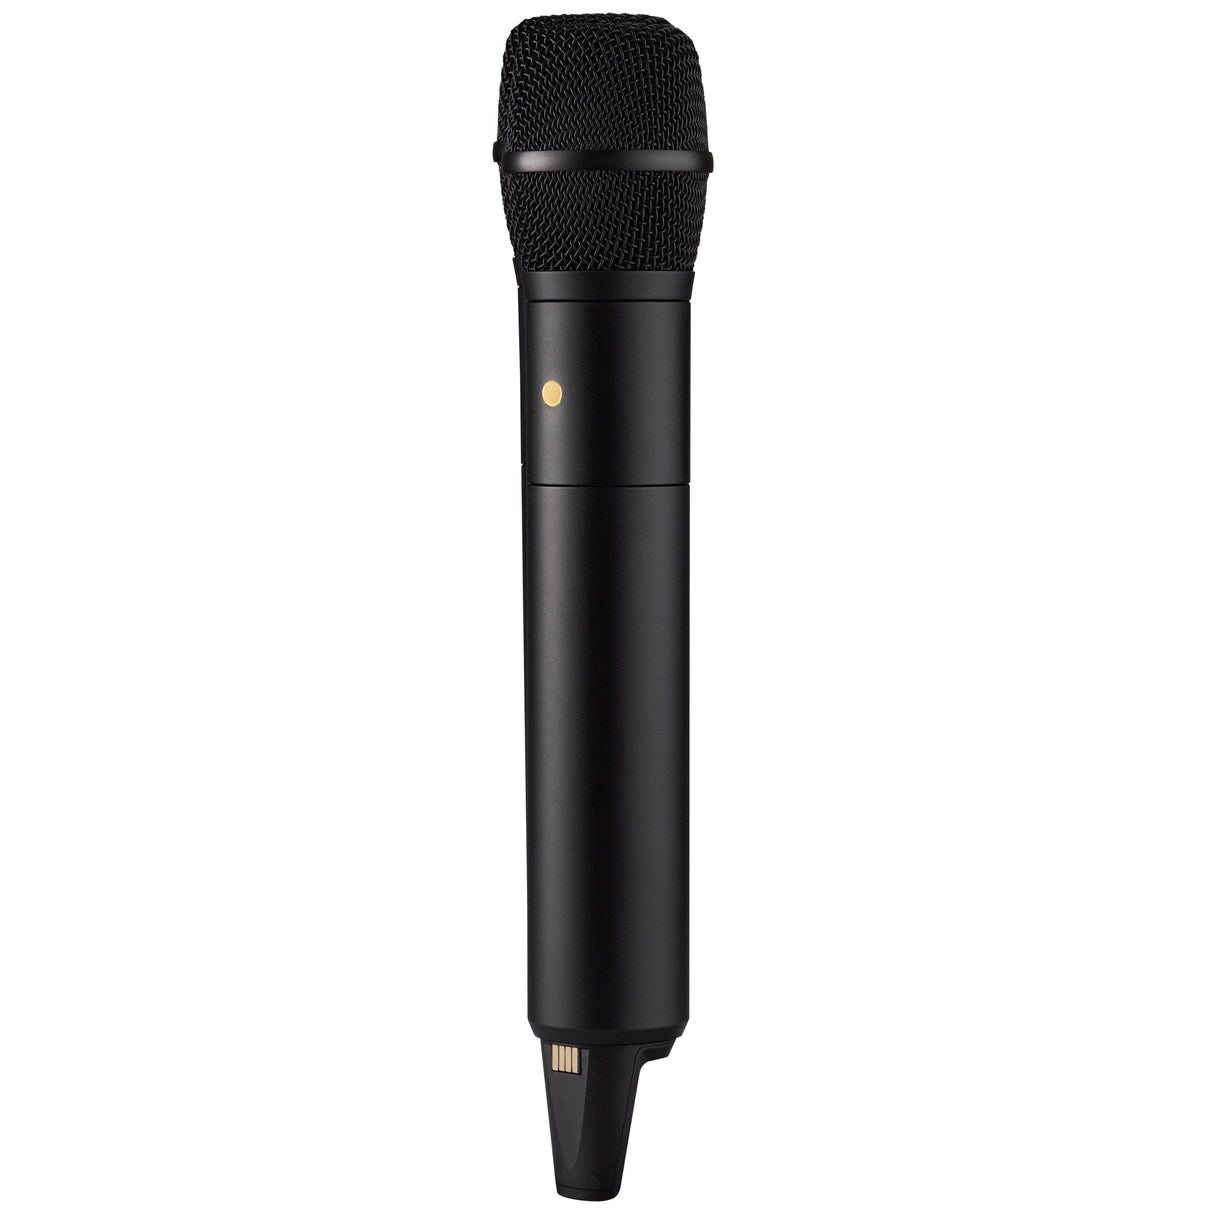 RODE Interview PRO Omnidirectional Wireless Handheld Condenser microphone